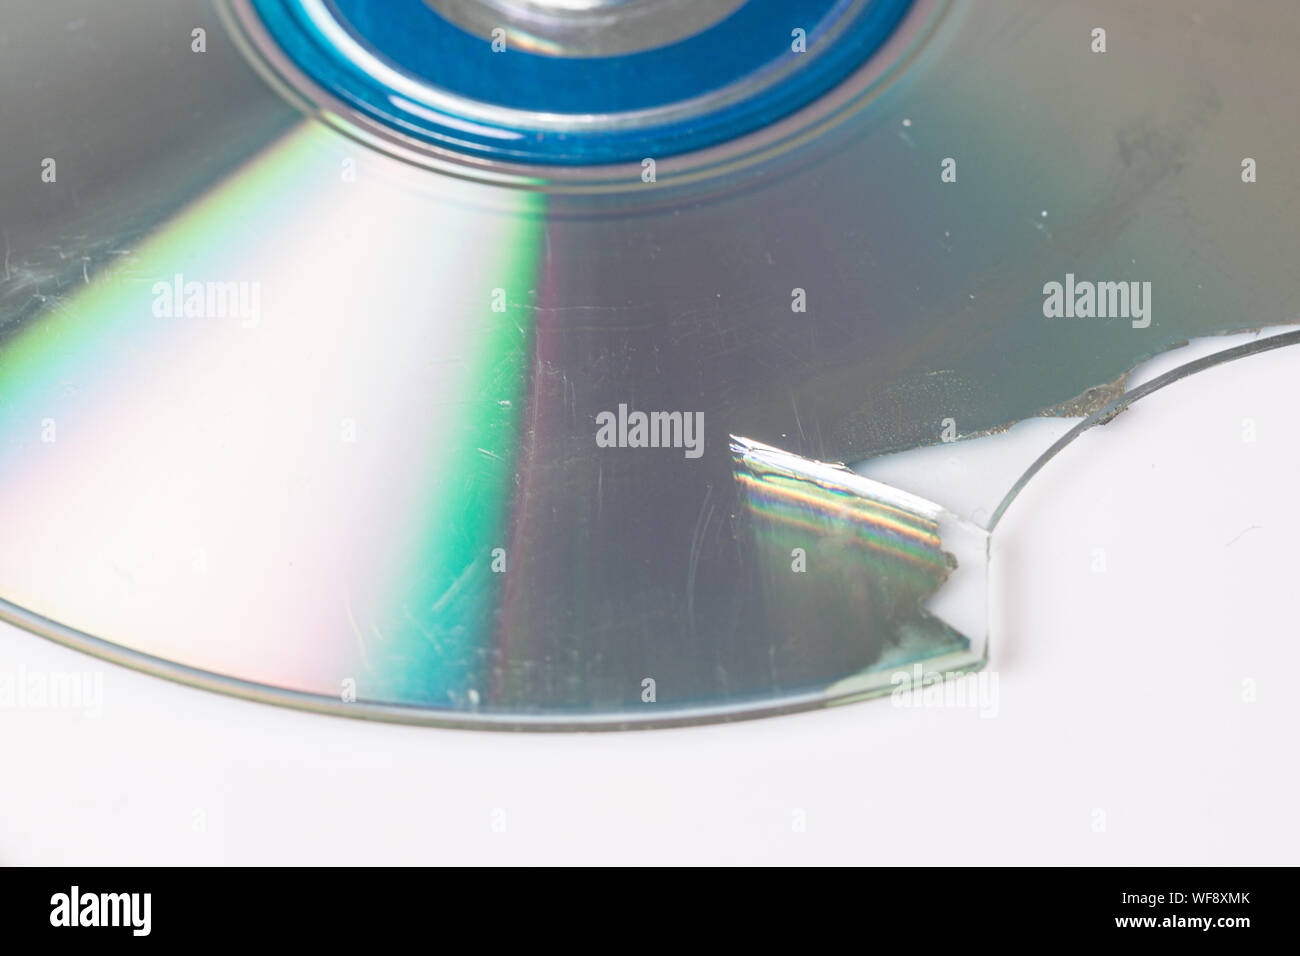 Broken and damaged optical disk storage data Stock Photo